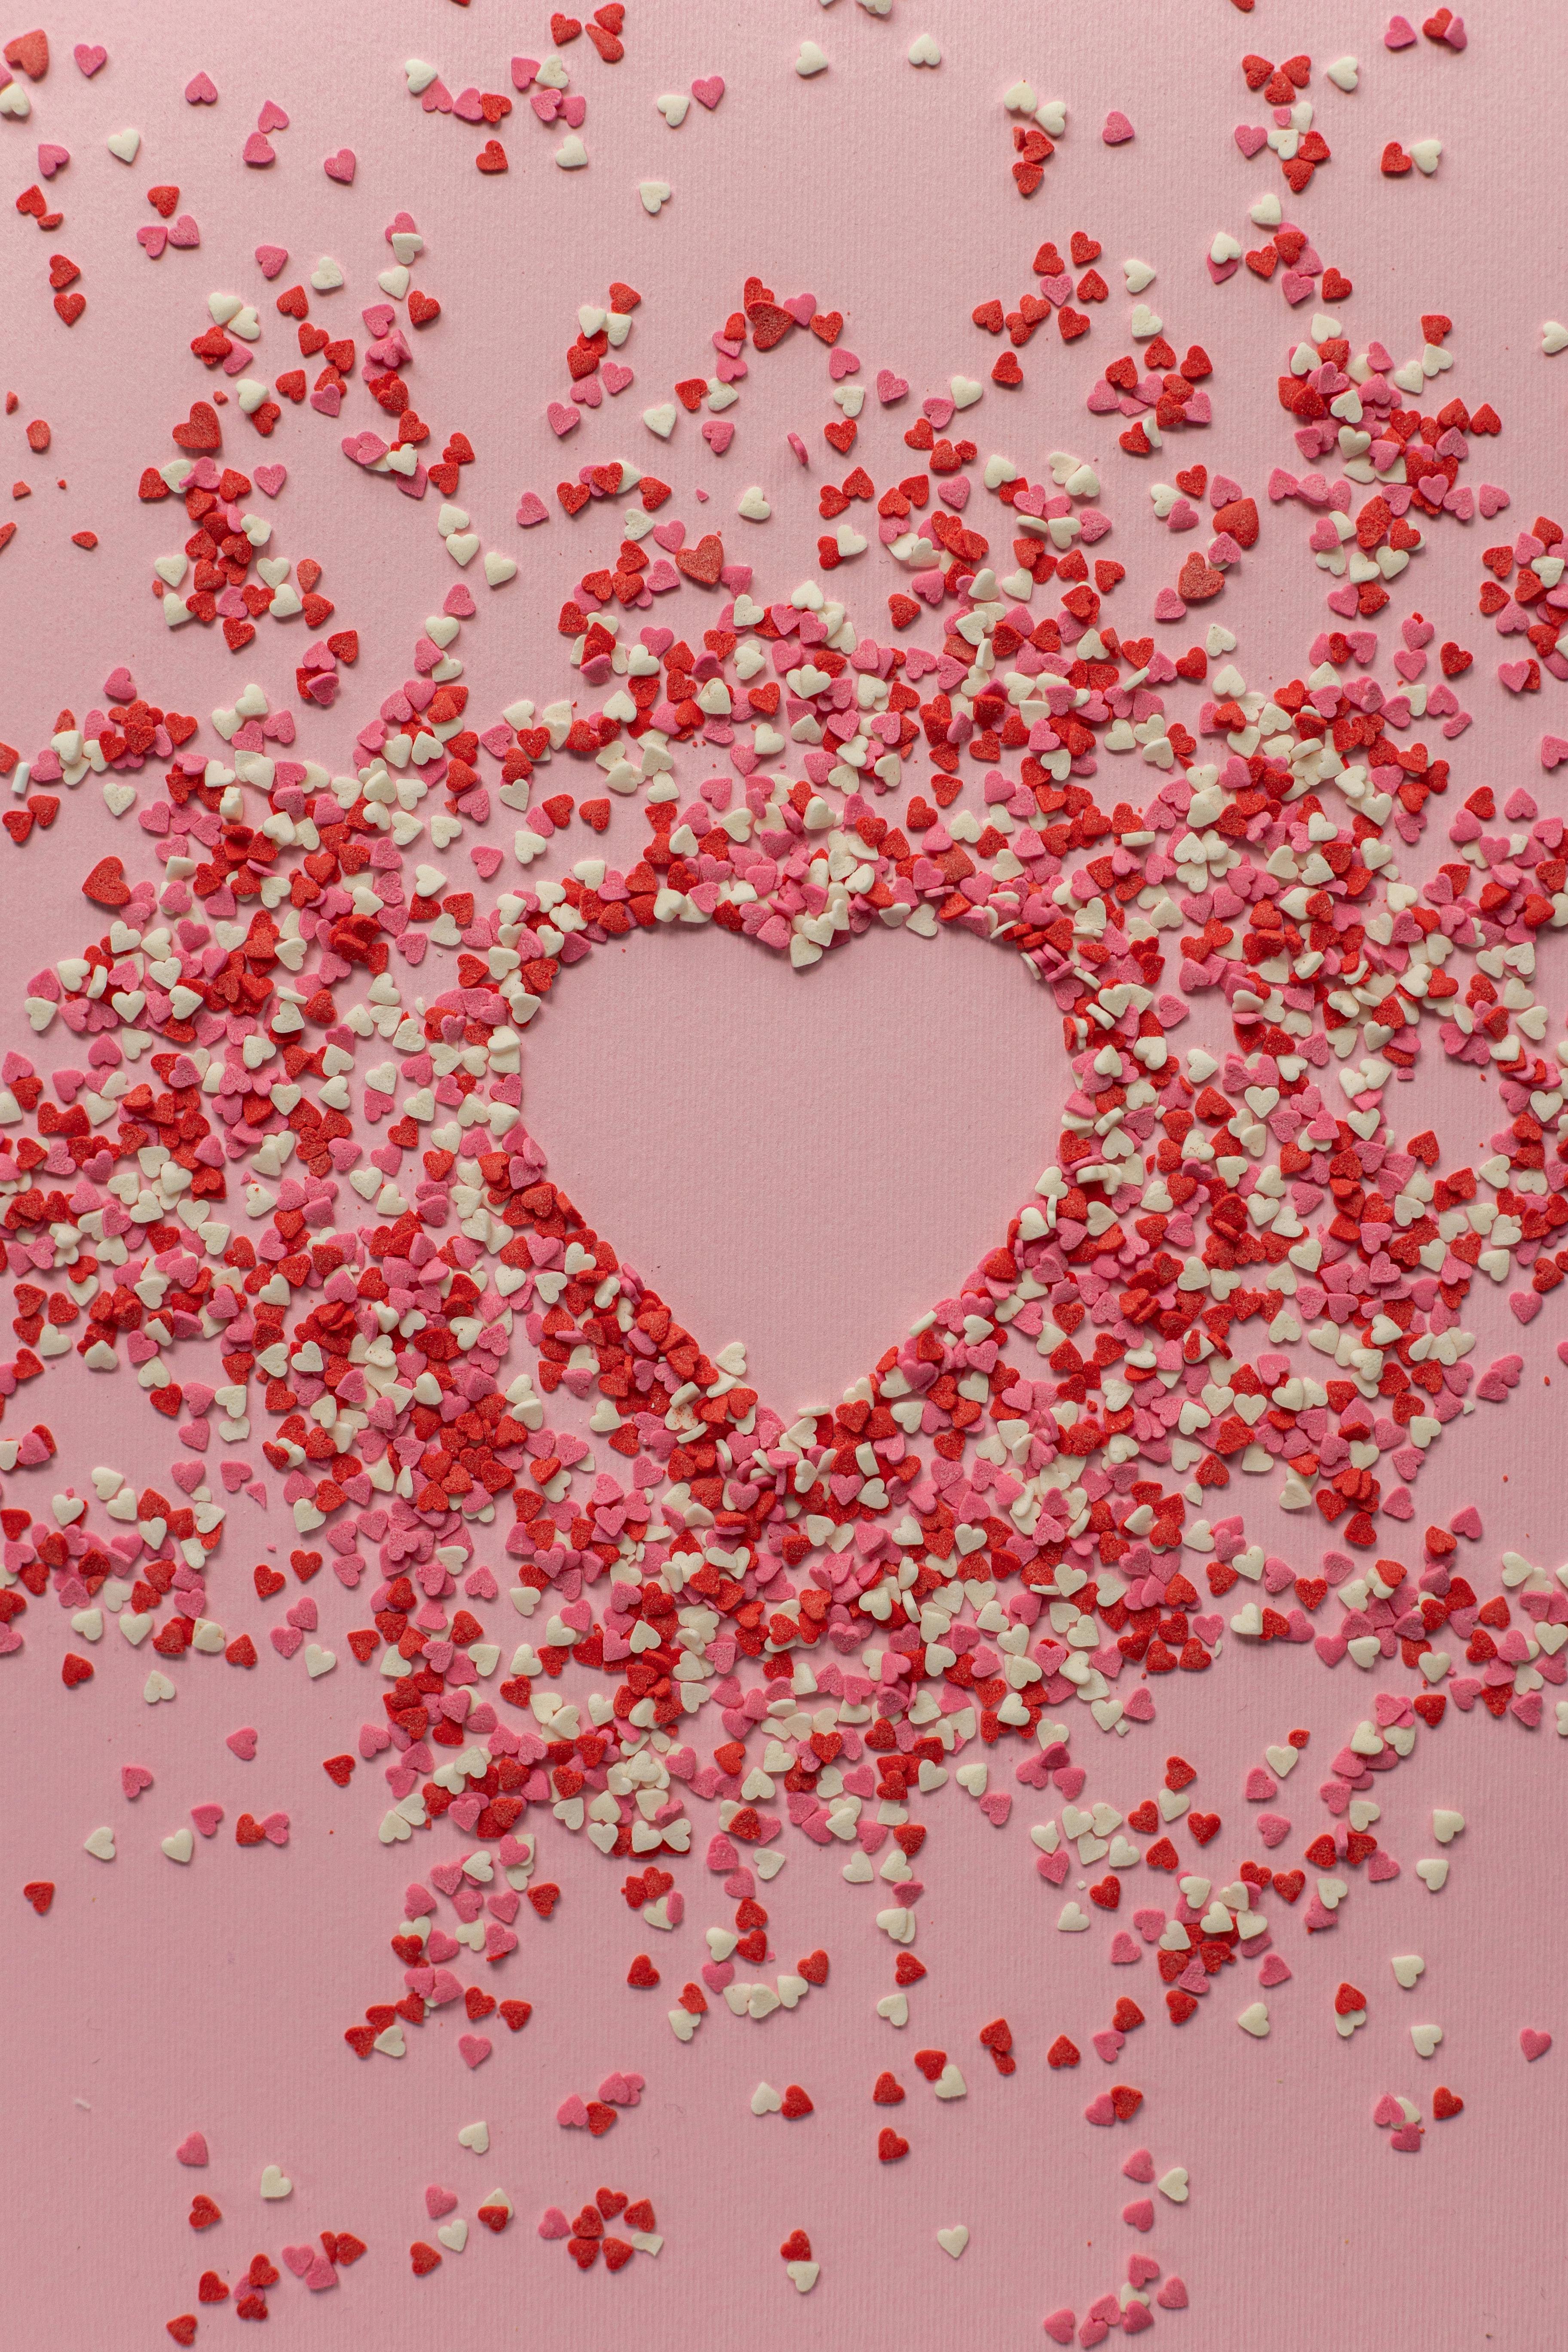 Pink cutout paper hearts Royalty Free Vector Image